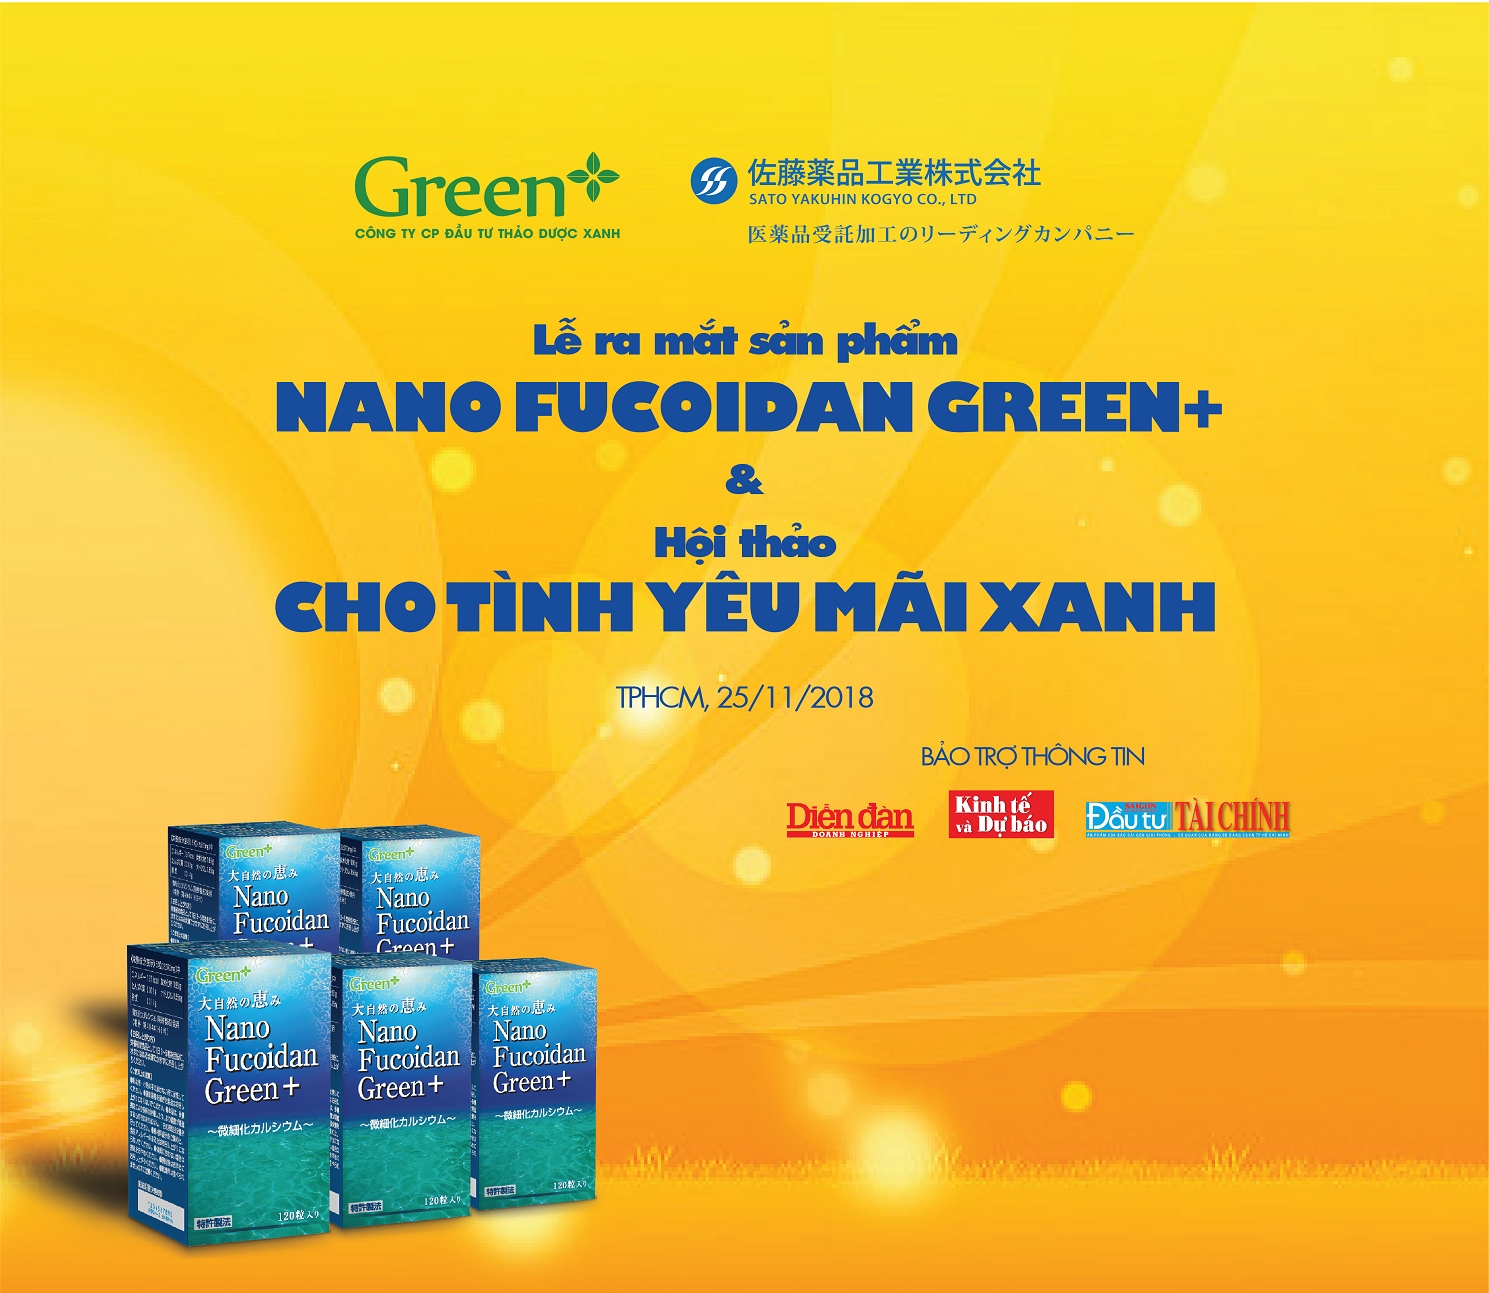 Ra mắt sản phẩm Nano Fucoidan Green+